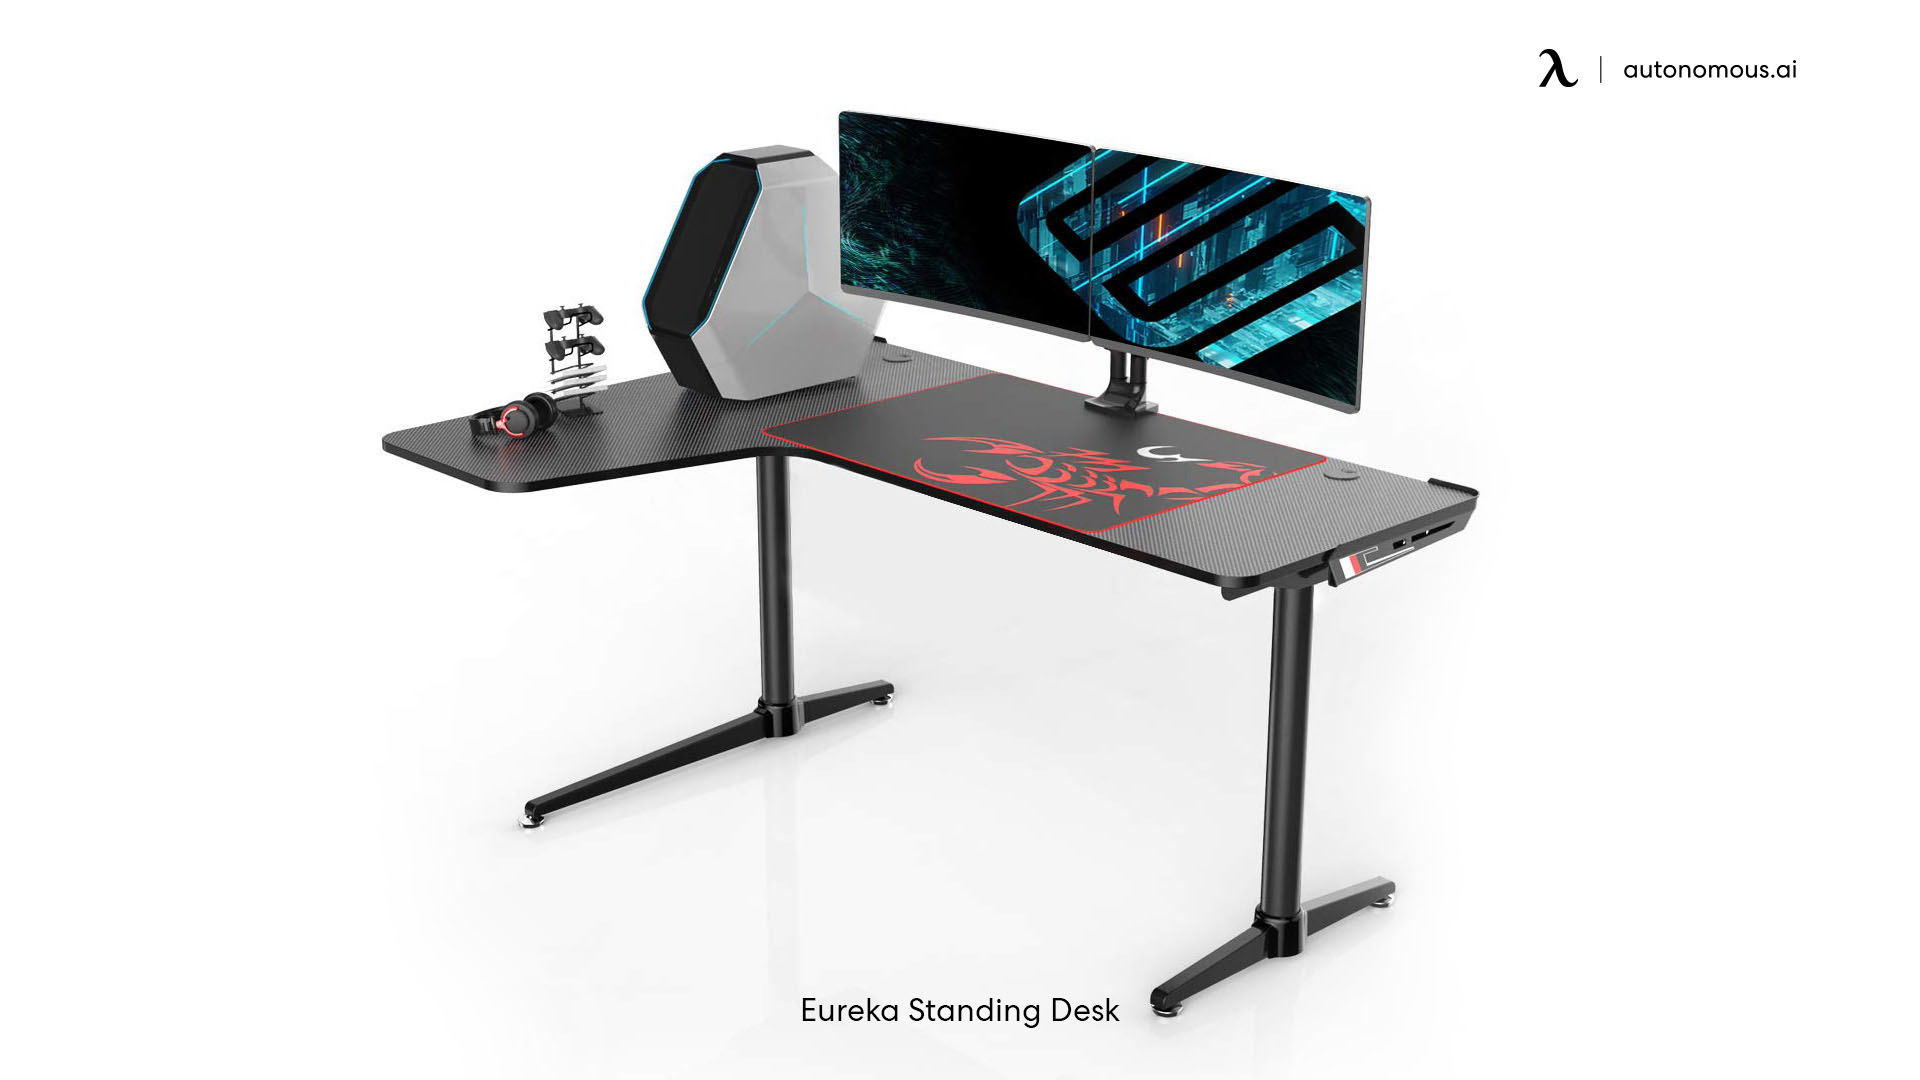 Eureka Standing Desk - corner desk idea